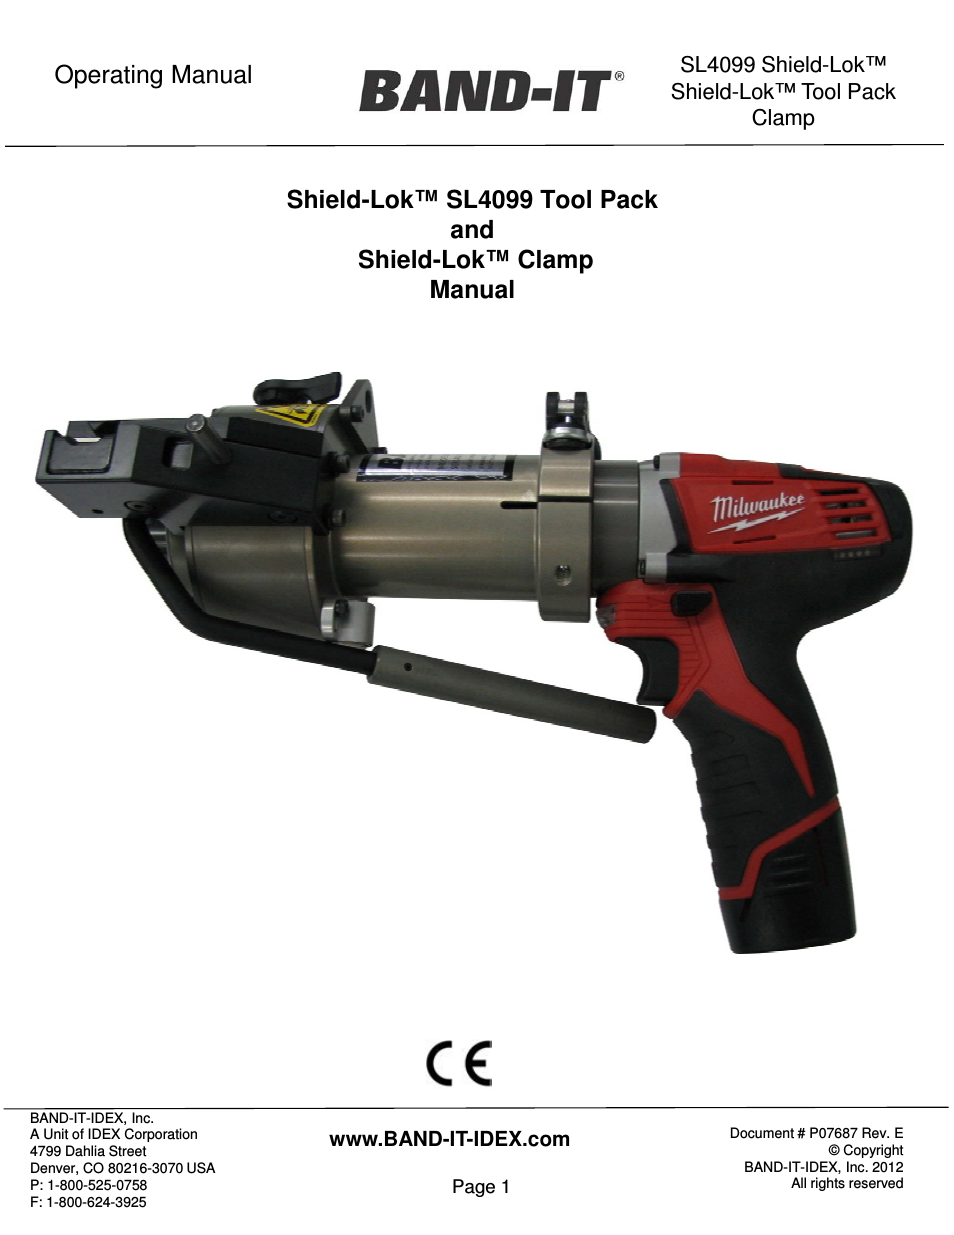 Shield-Lok Clamp